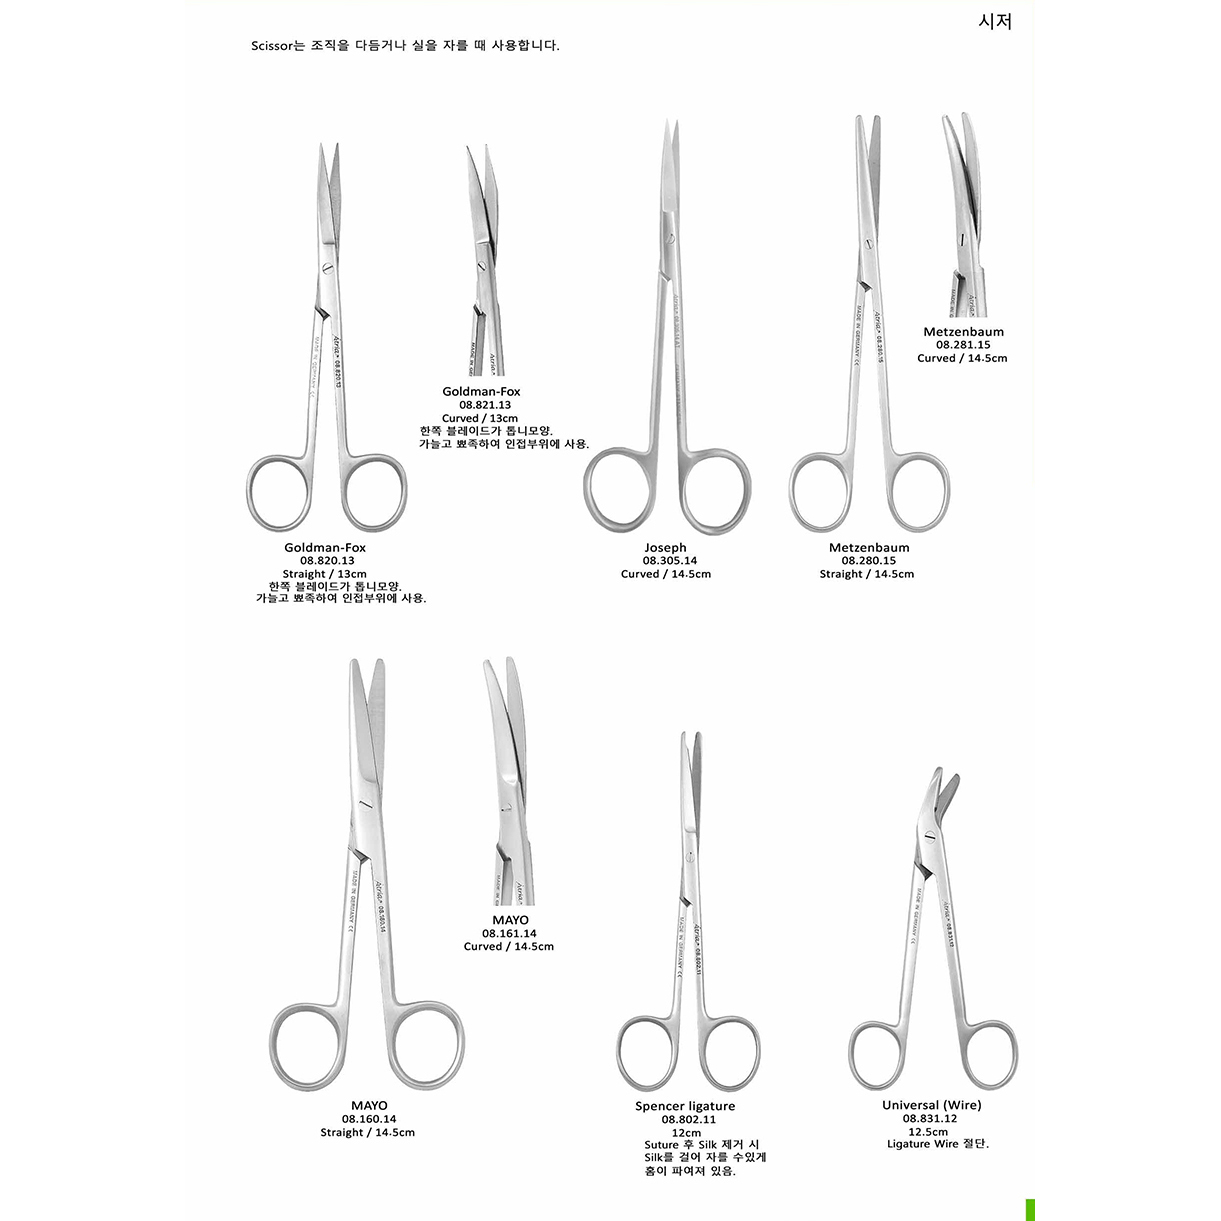 [Scissors]  Spencer ligature (08.802.11)